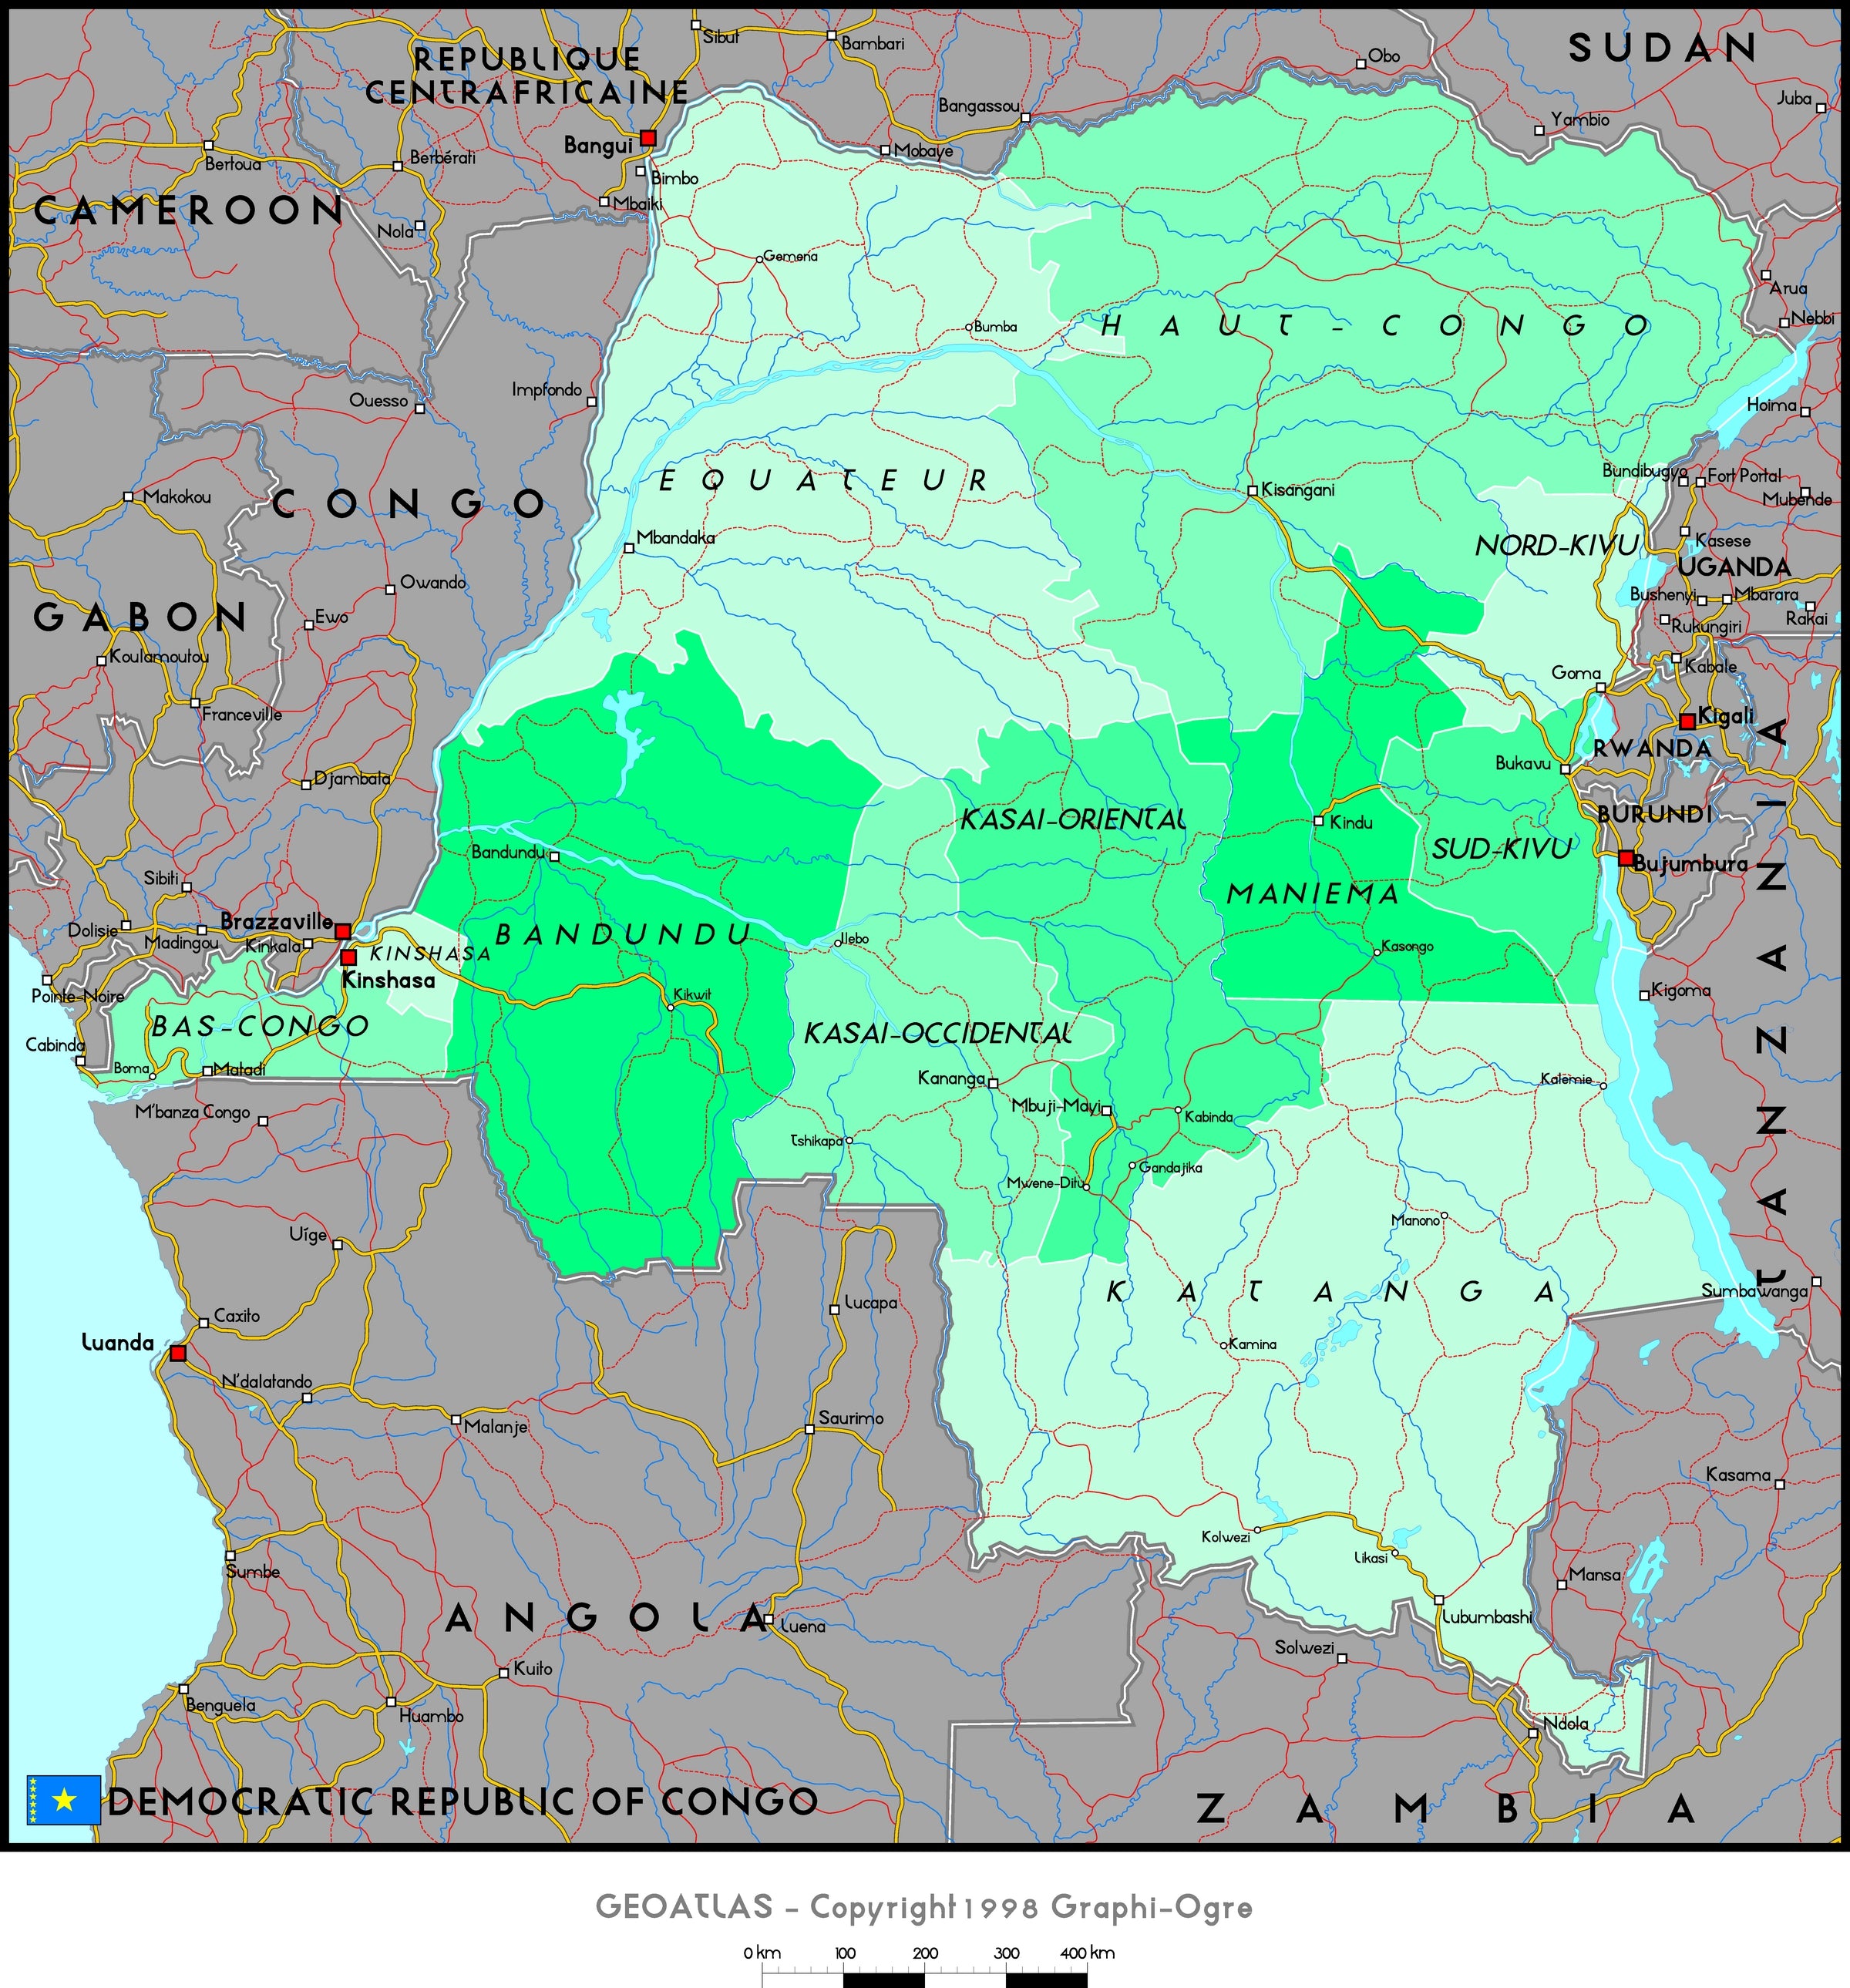 Democratic Republic Of Congo Political Map | Maps.com.com